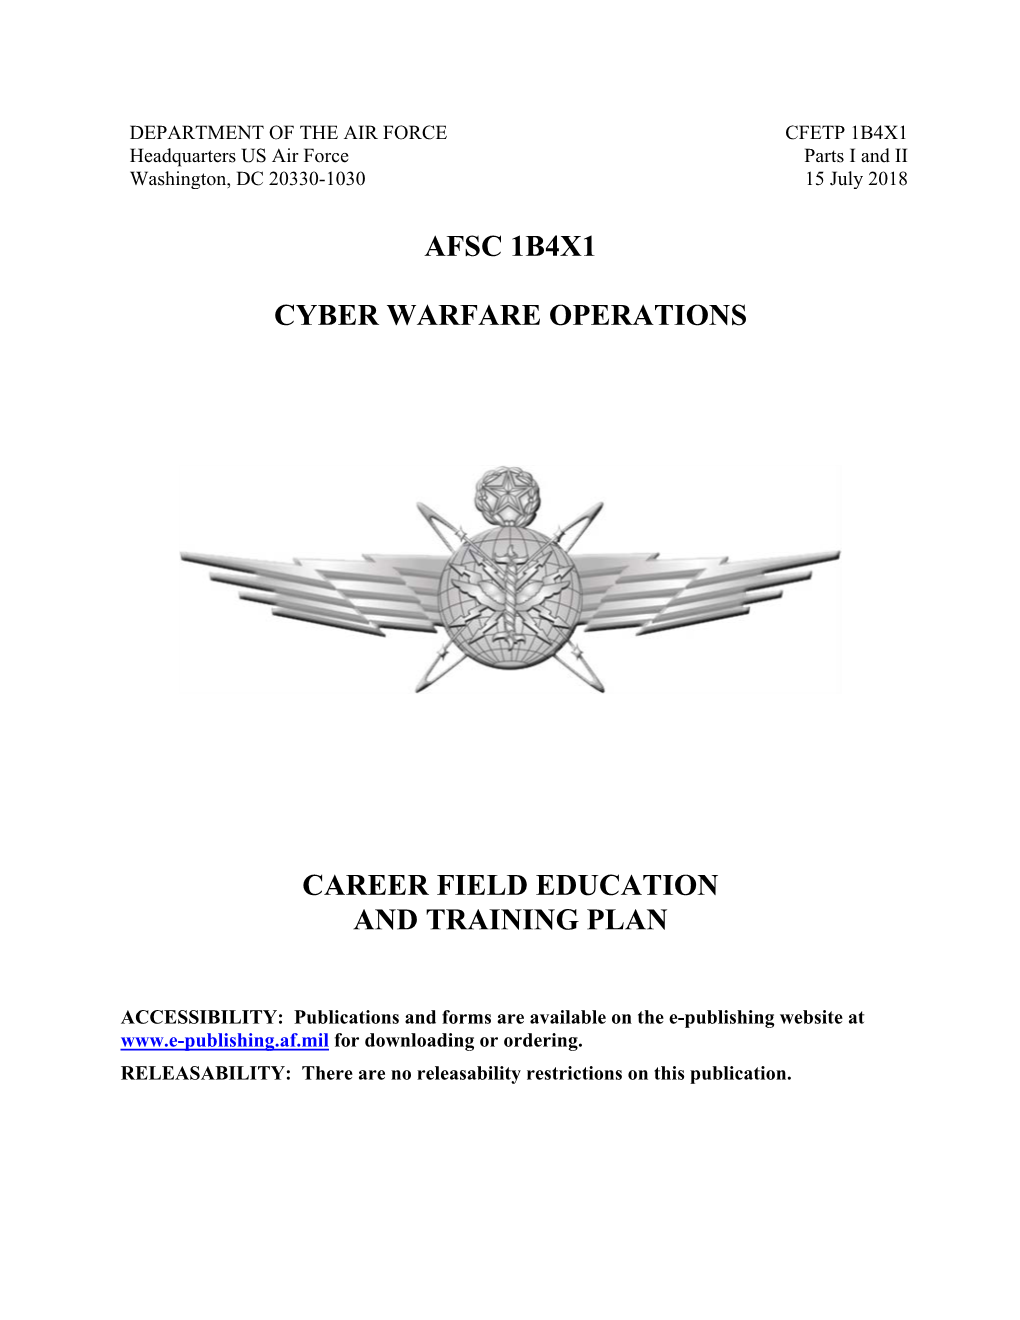 Afsc 1B4x1 Cyber Warfare Operations Career Field Education and Training